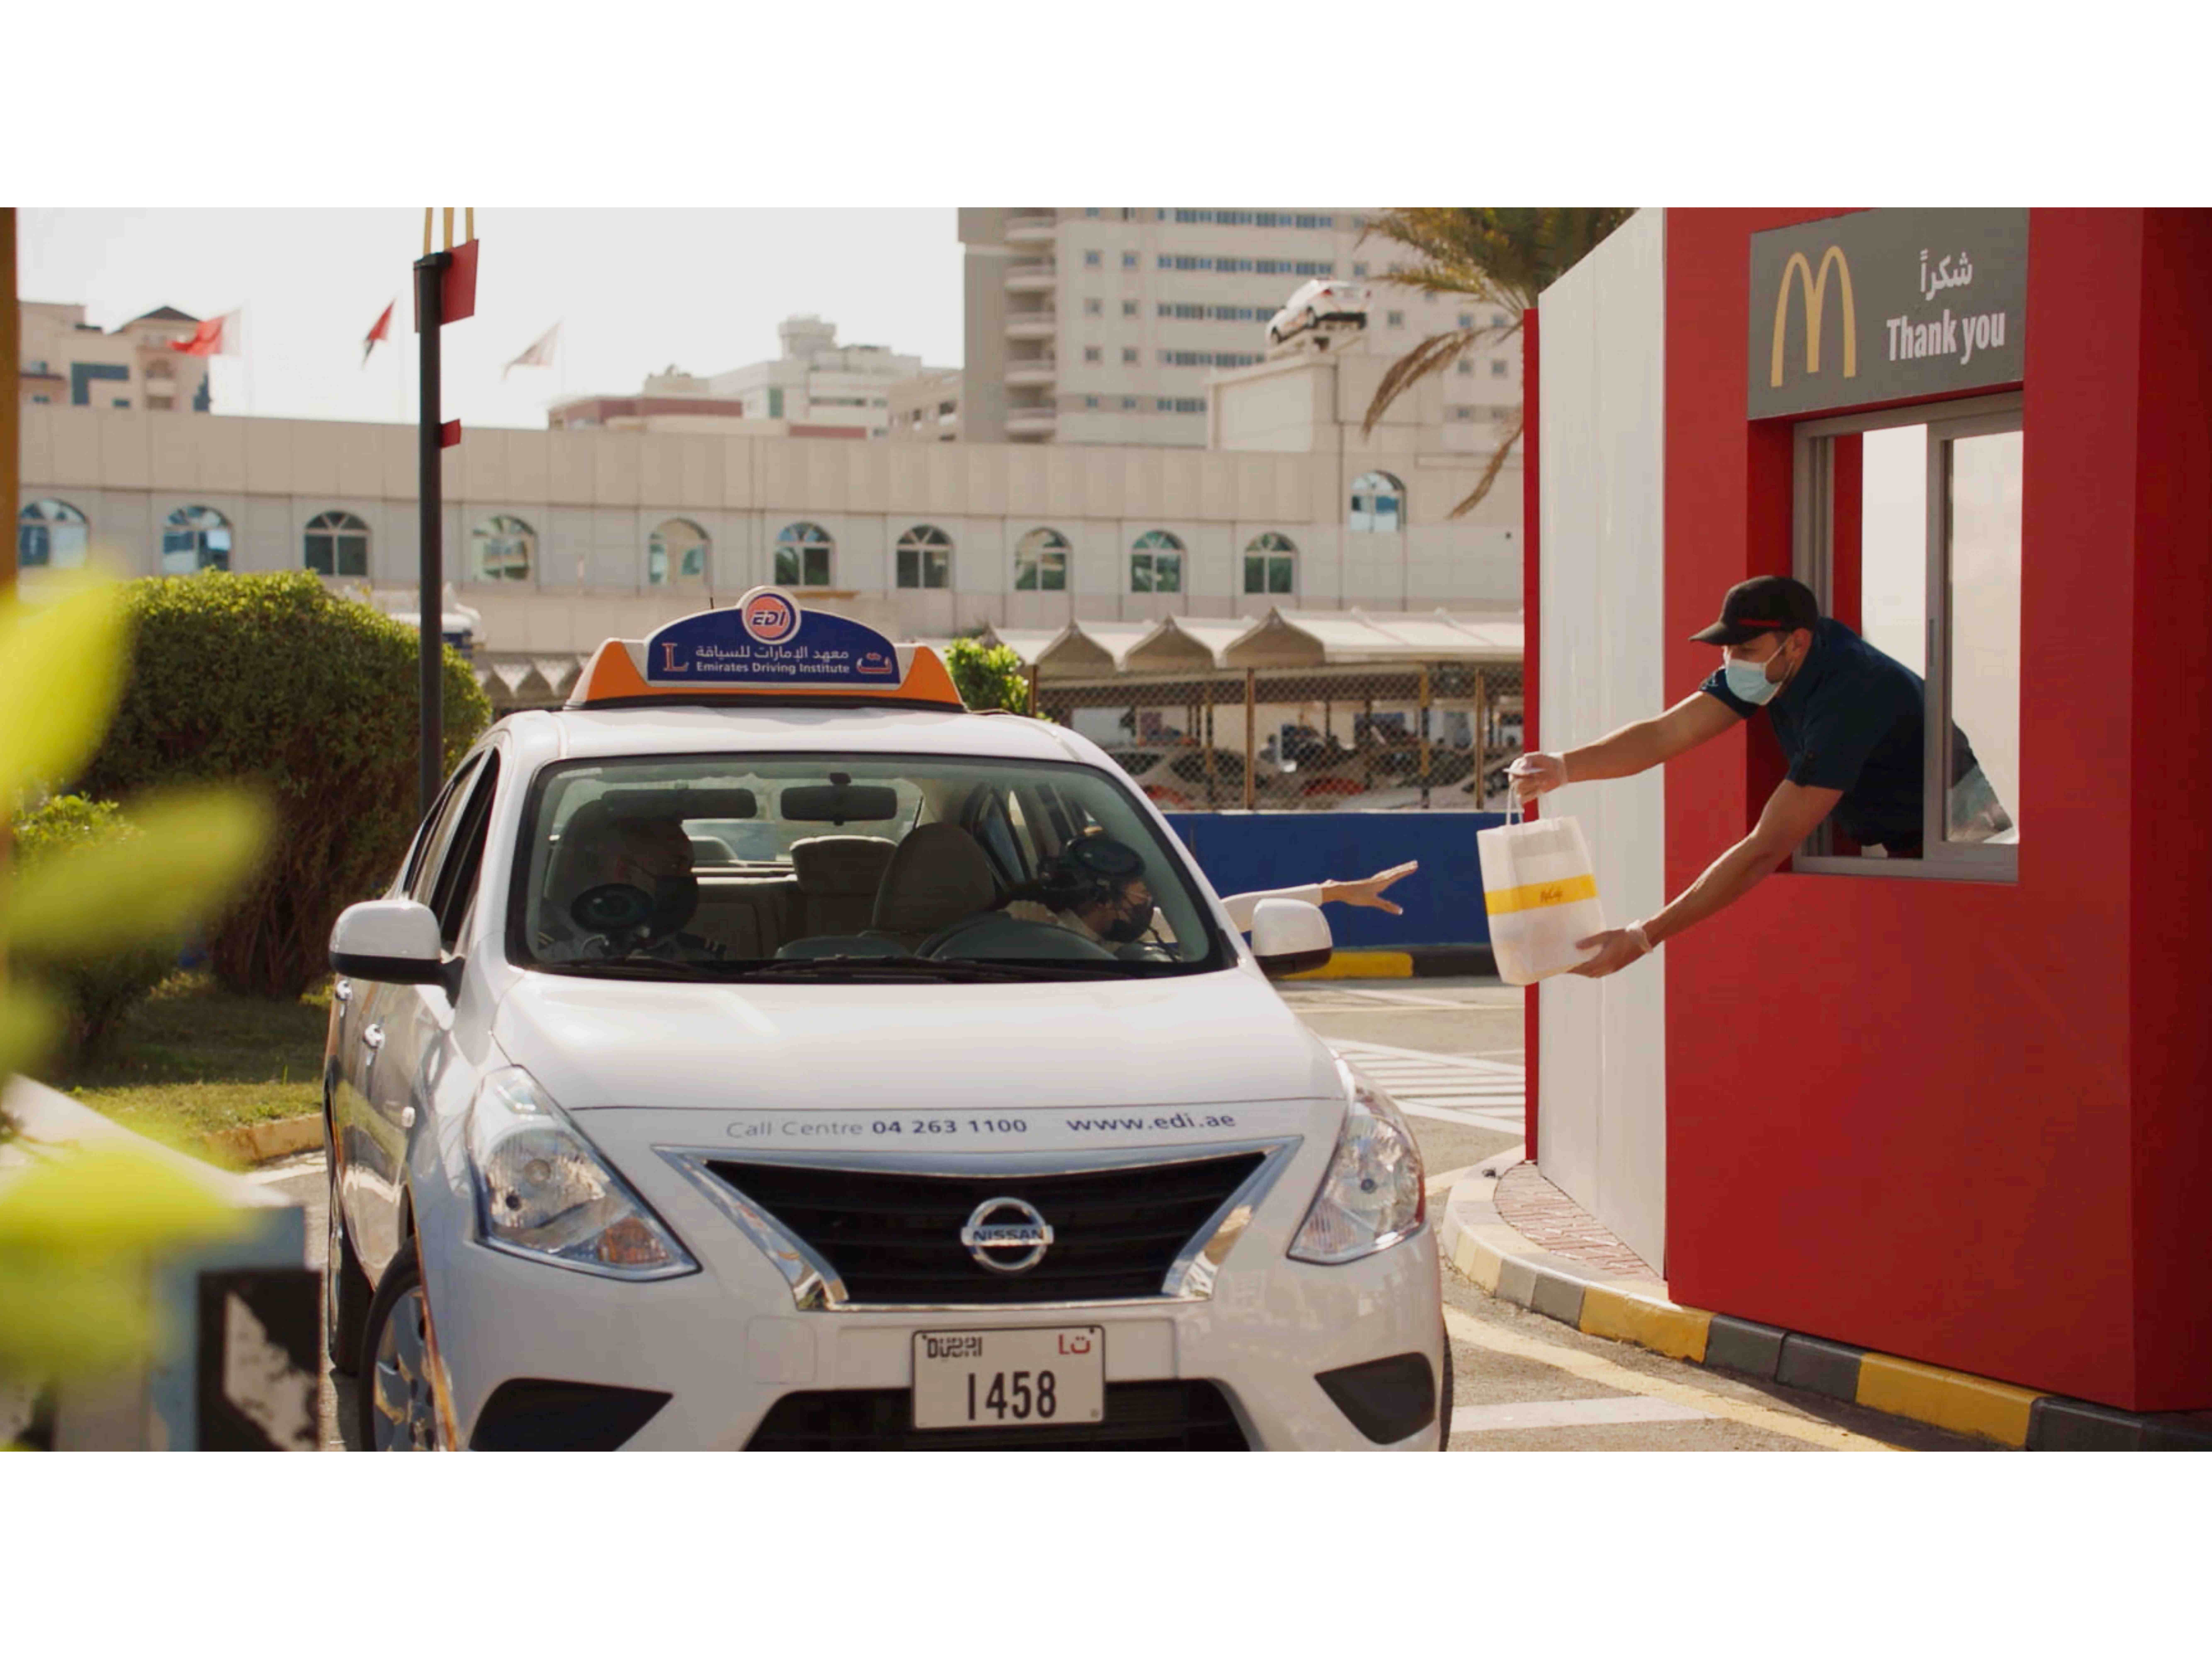 McDonald’s UAE helps new drivers get their way through the ‘drive thru’ lane 